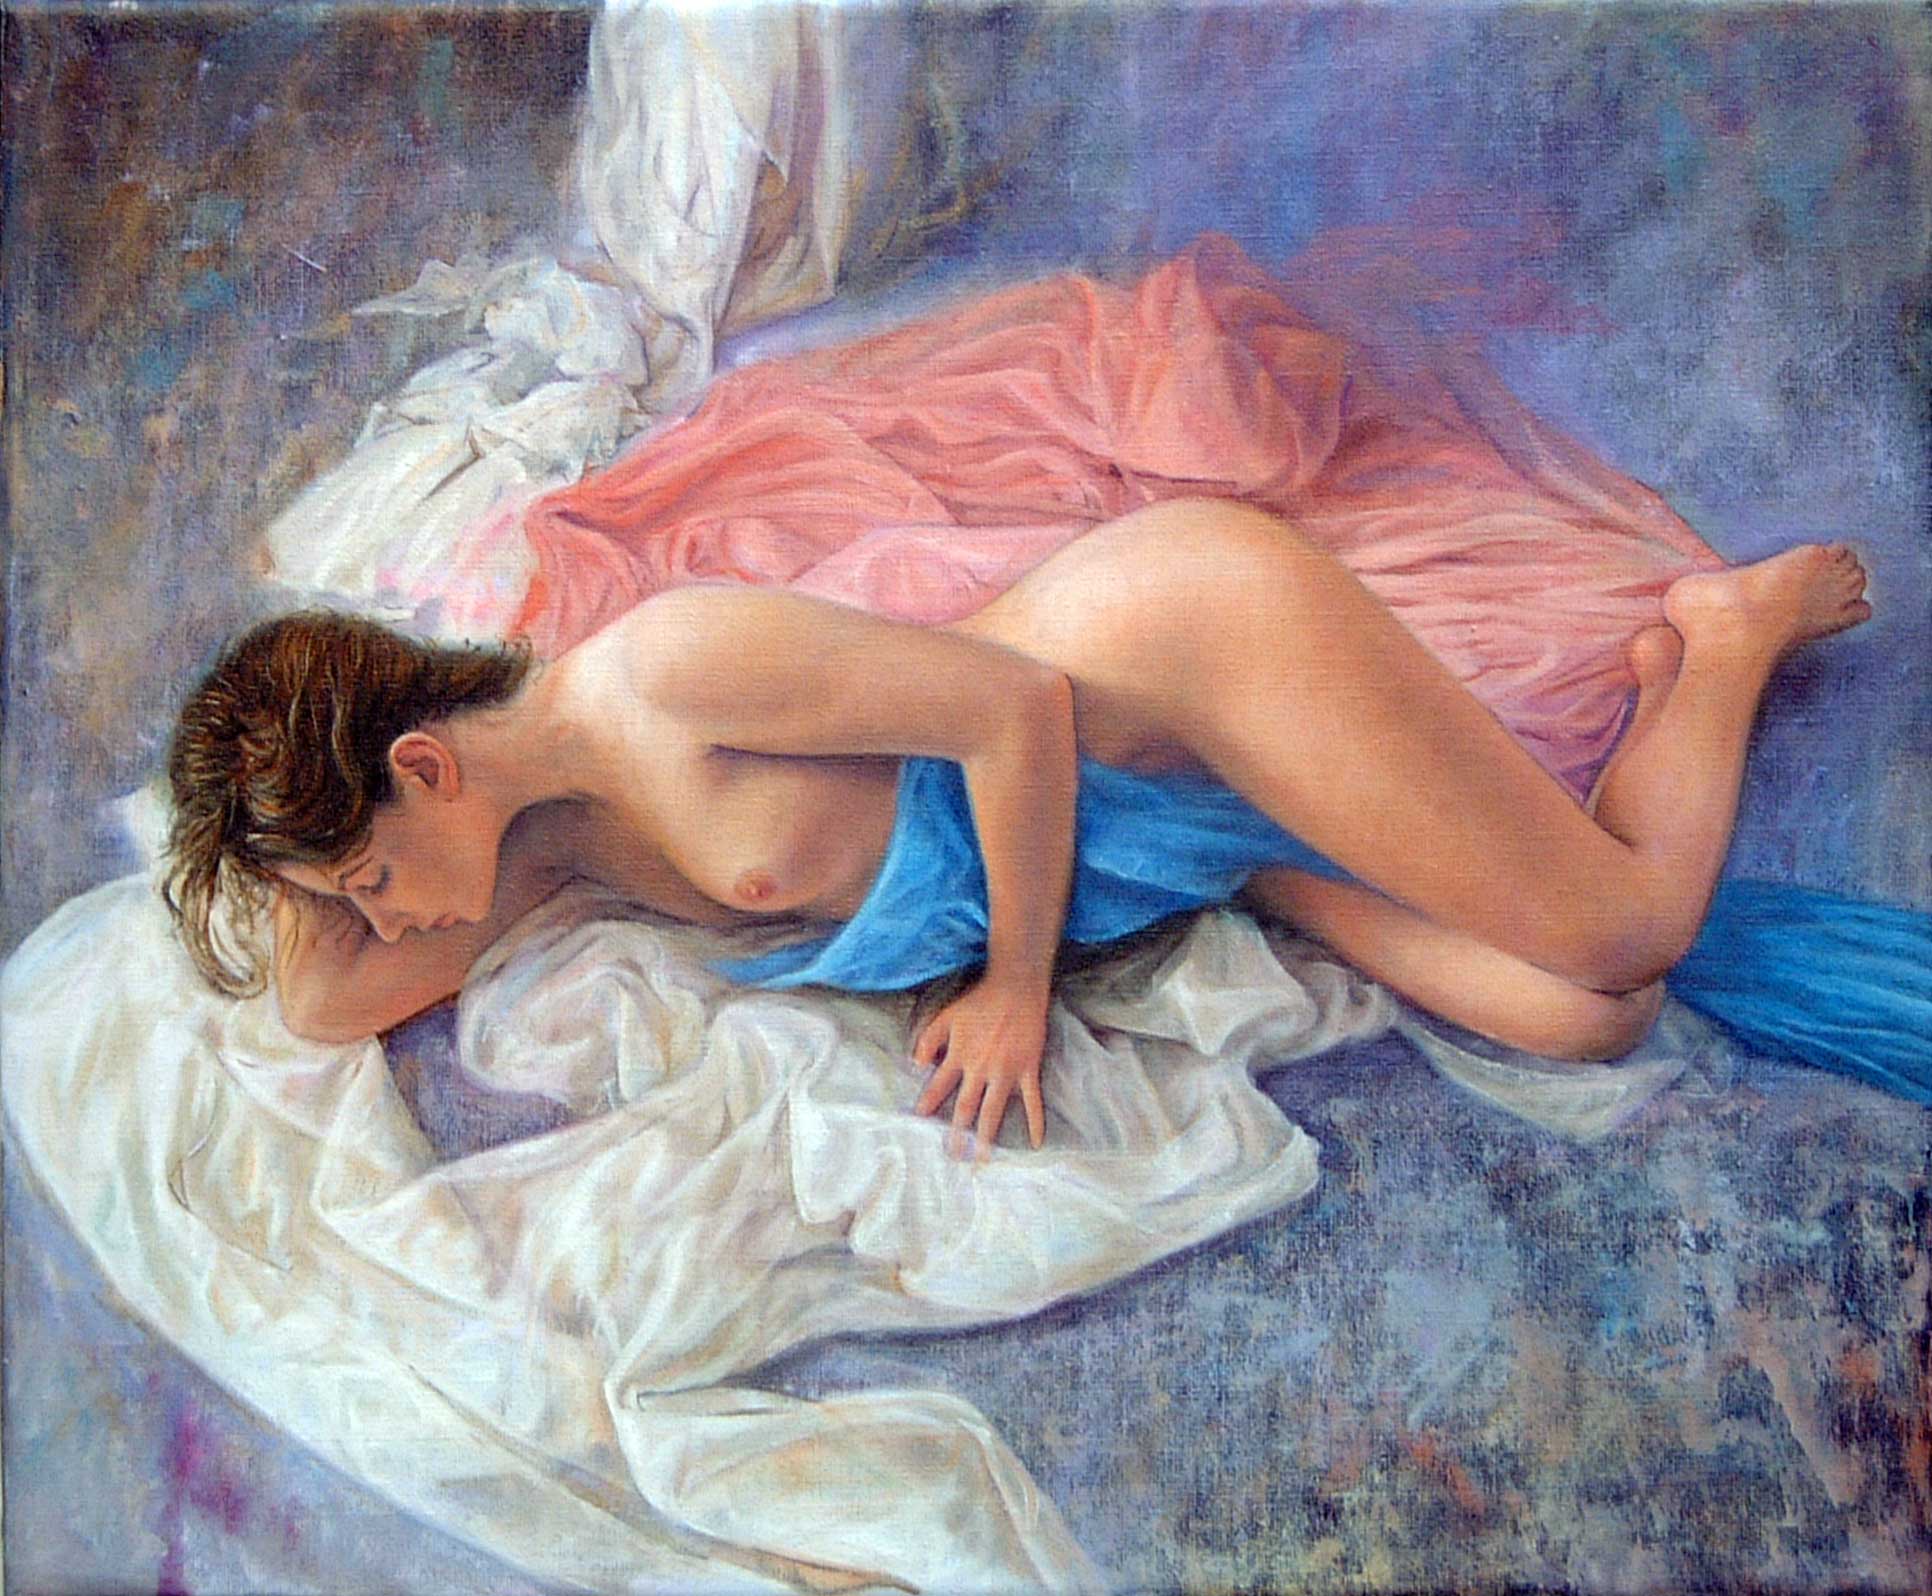 Desnudo sobre sábana blanca, rosa y azul